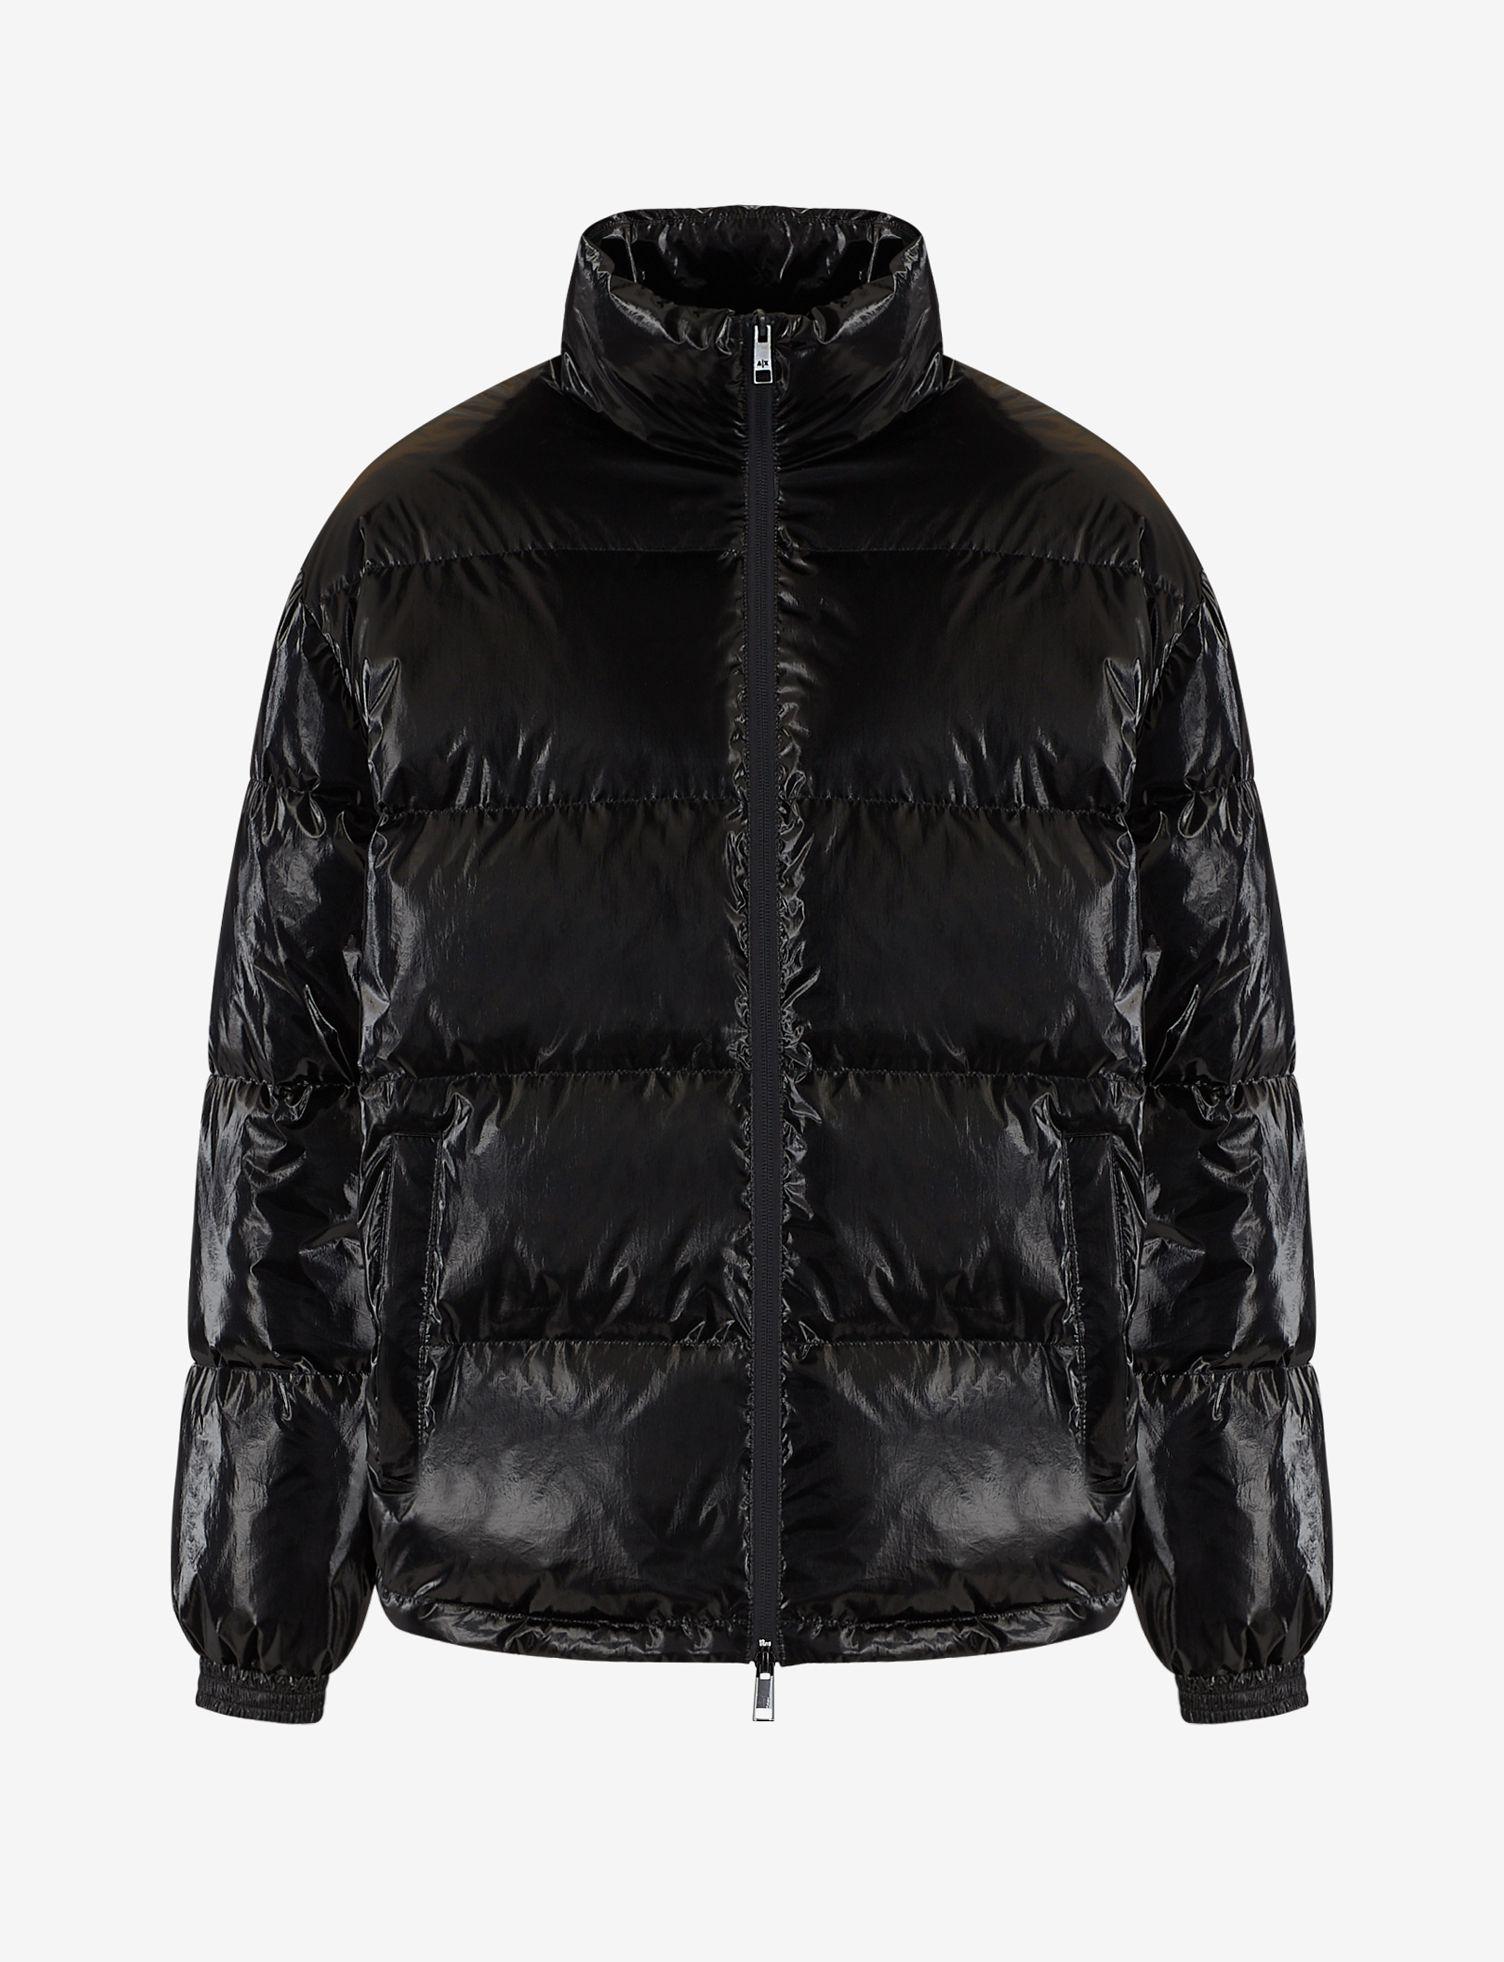 Armani Exchange Puffer Jacket in Black for Men - Lyst